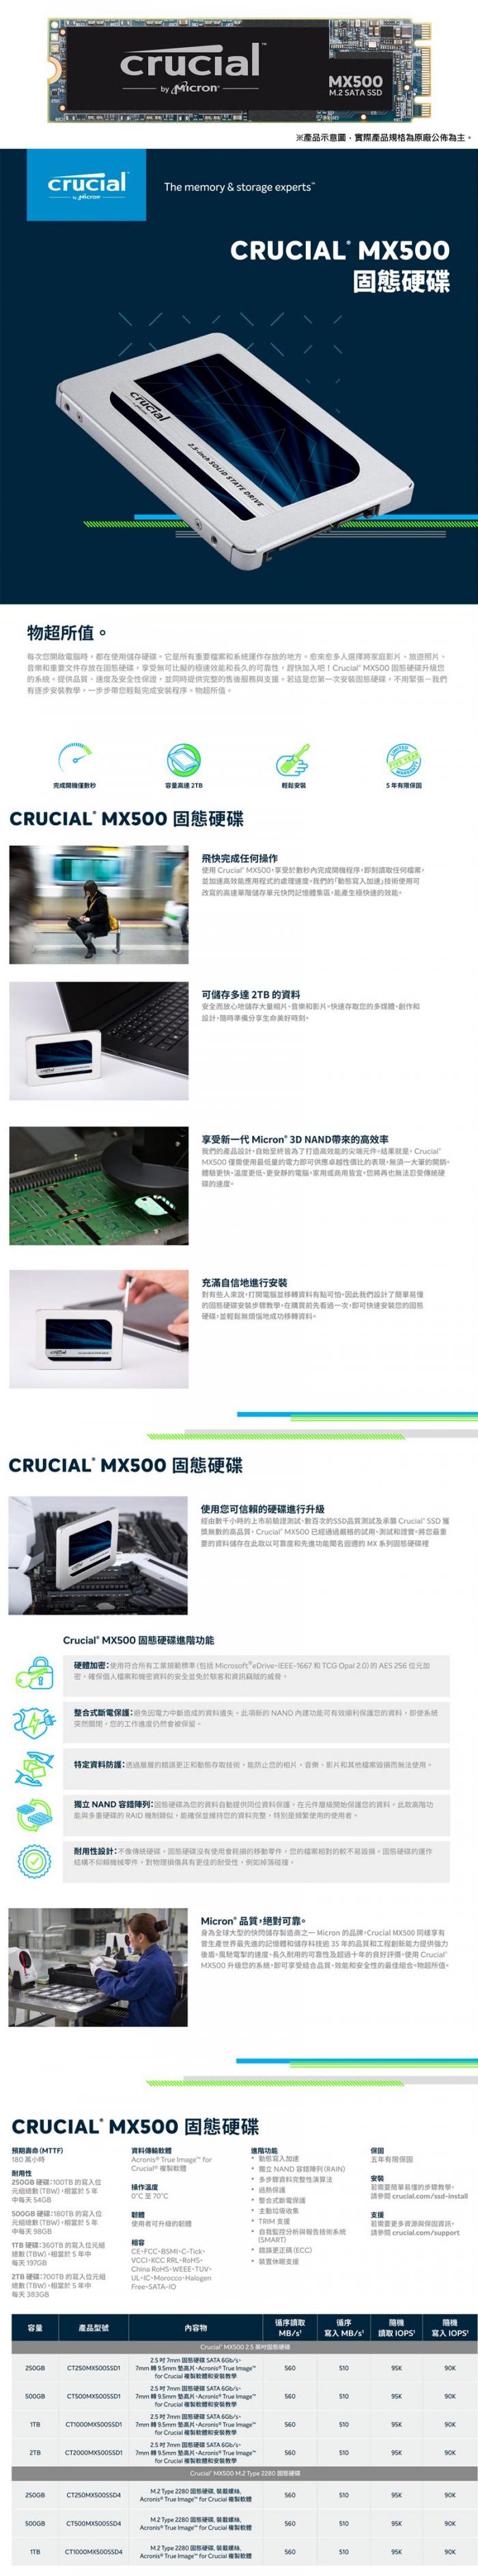  美光 Crucial MX500 500G M.2 SATA 2280